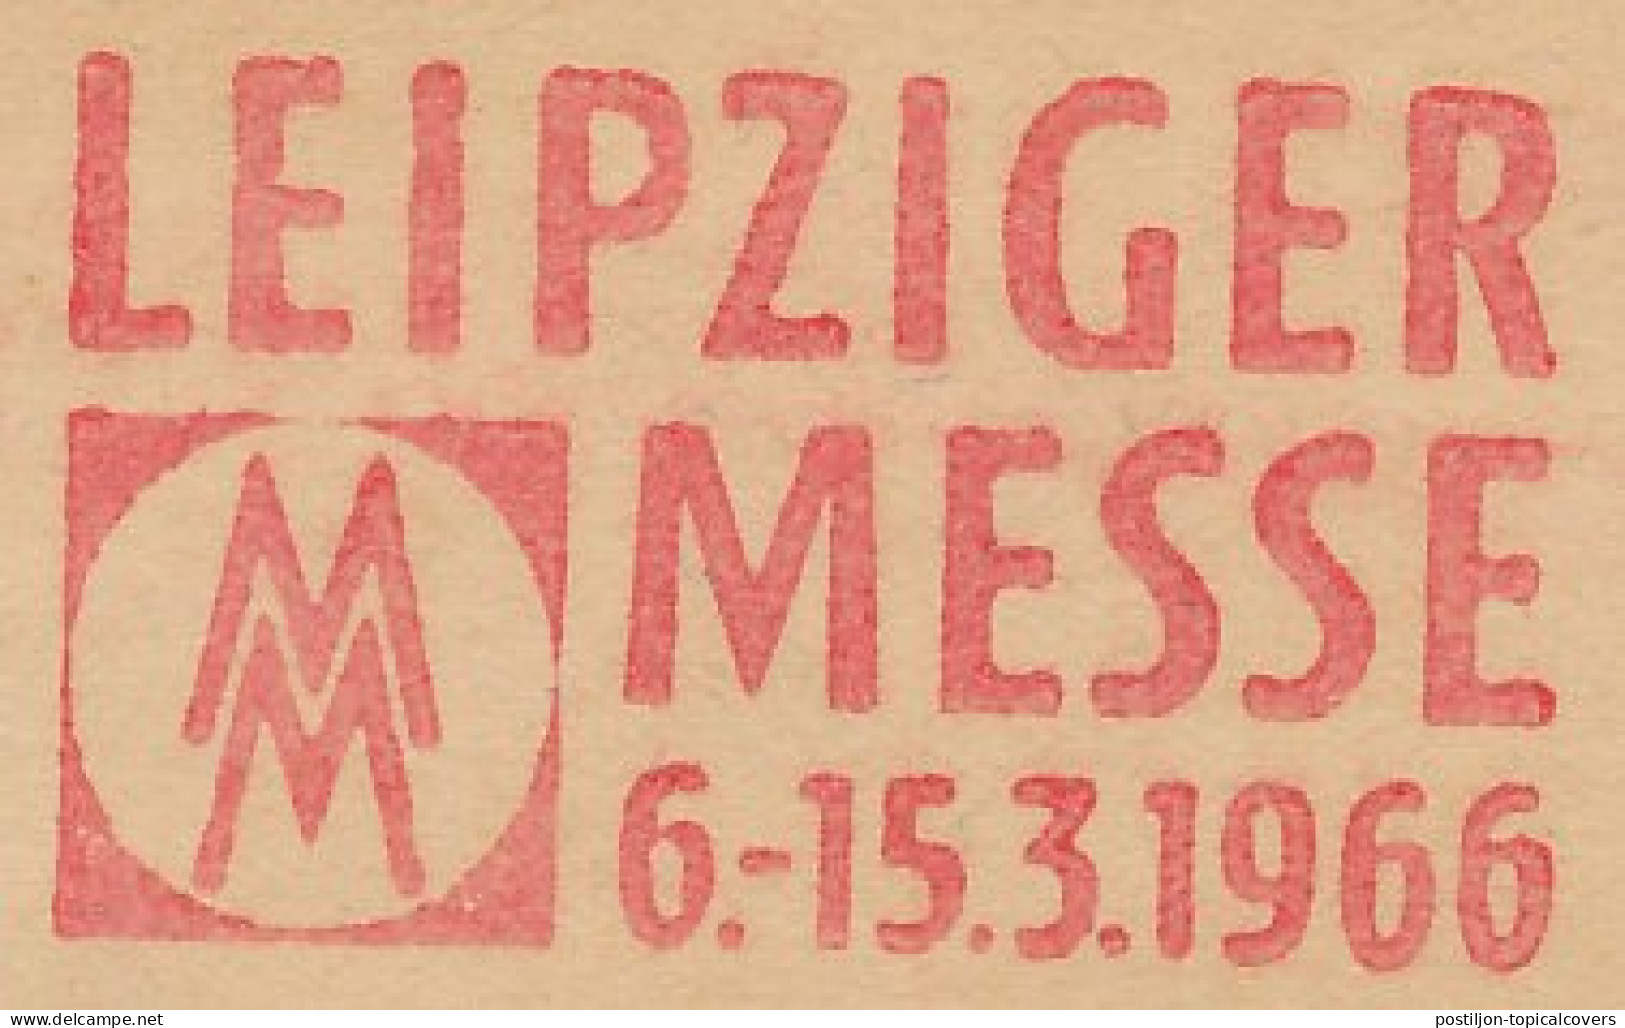 Meter Cut Germany / Deutsche Post 1966 Leipziger Messe - Non Classés